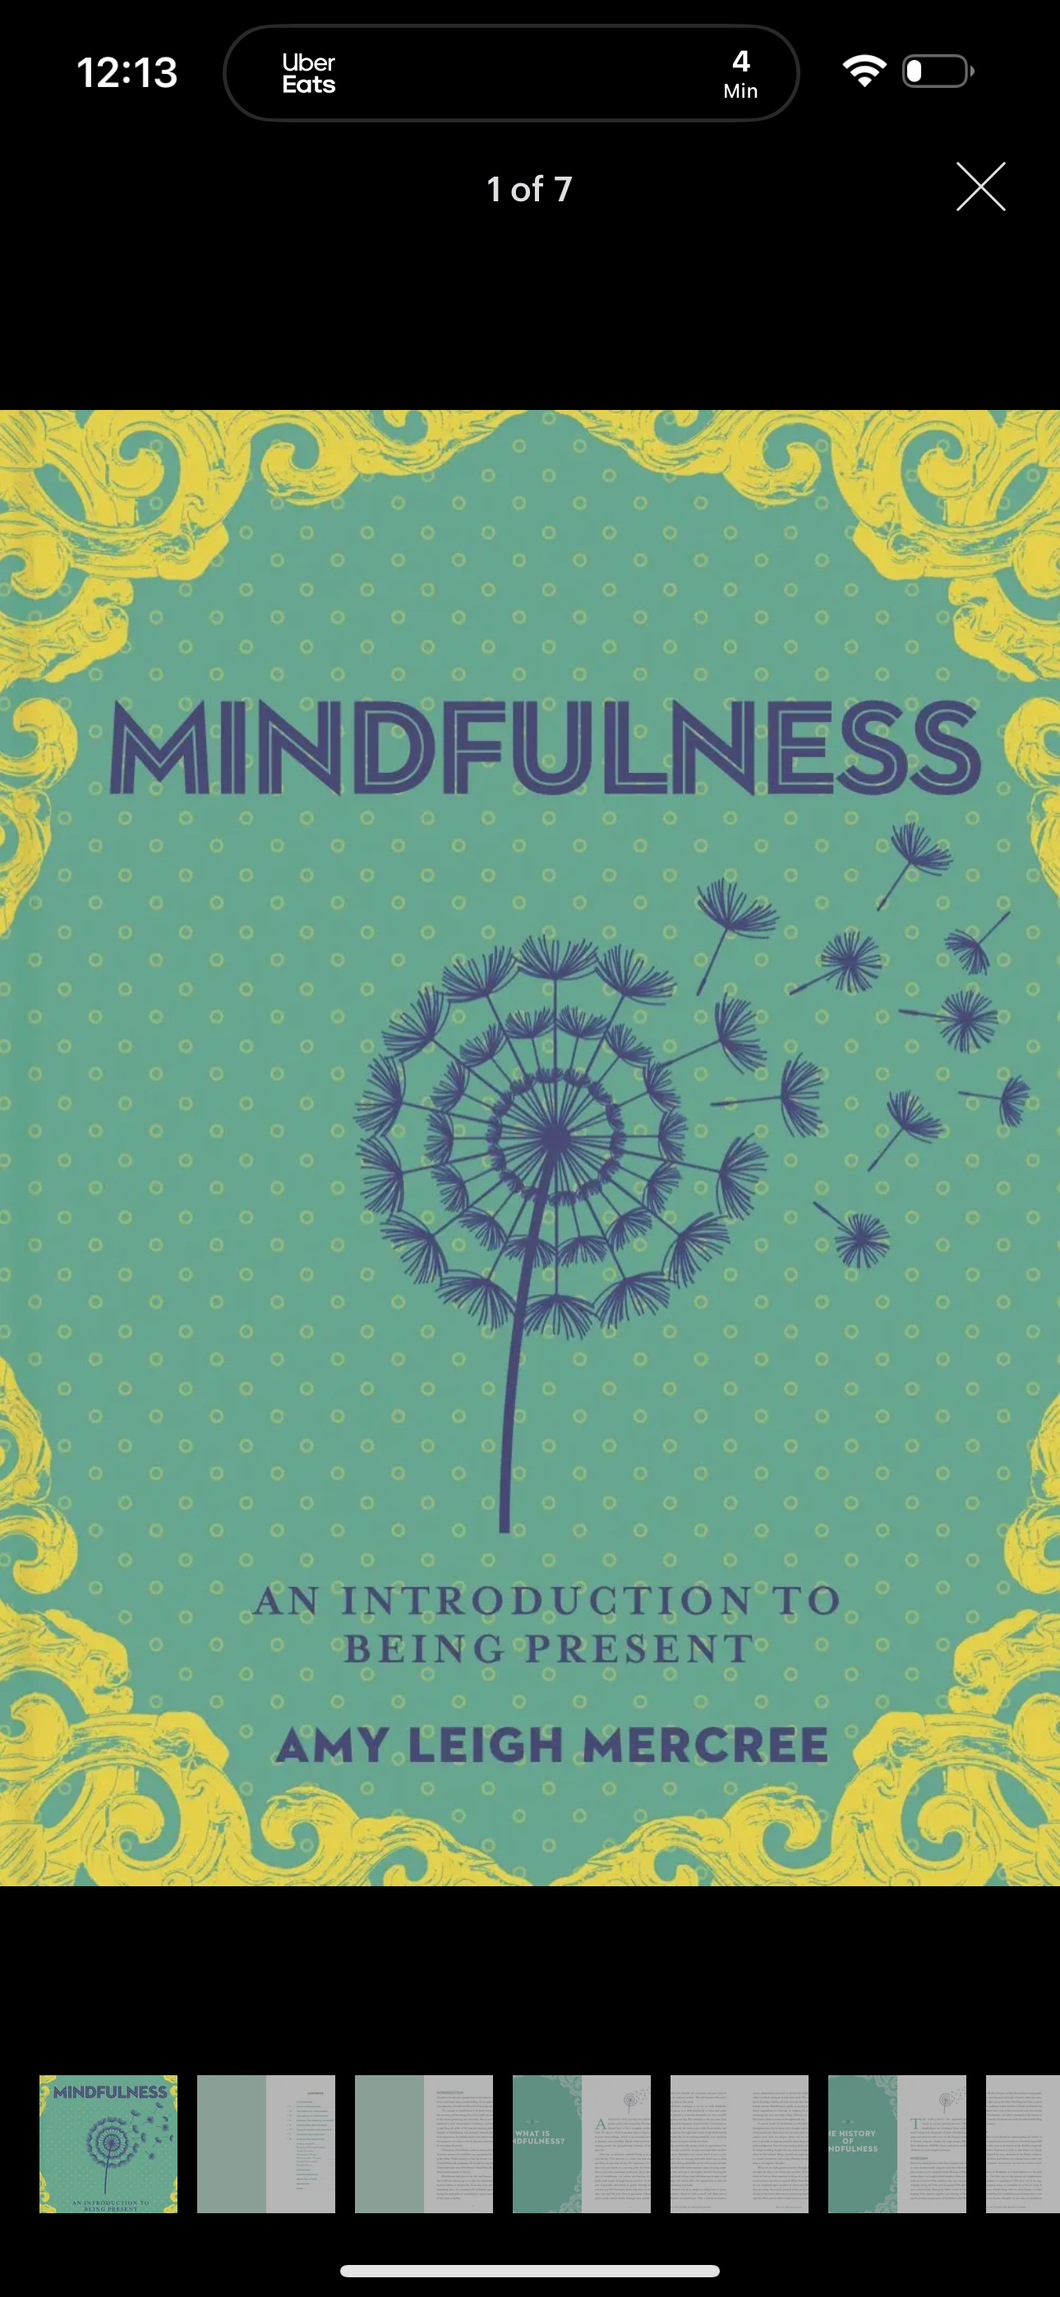 A little bit of Mindfulness